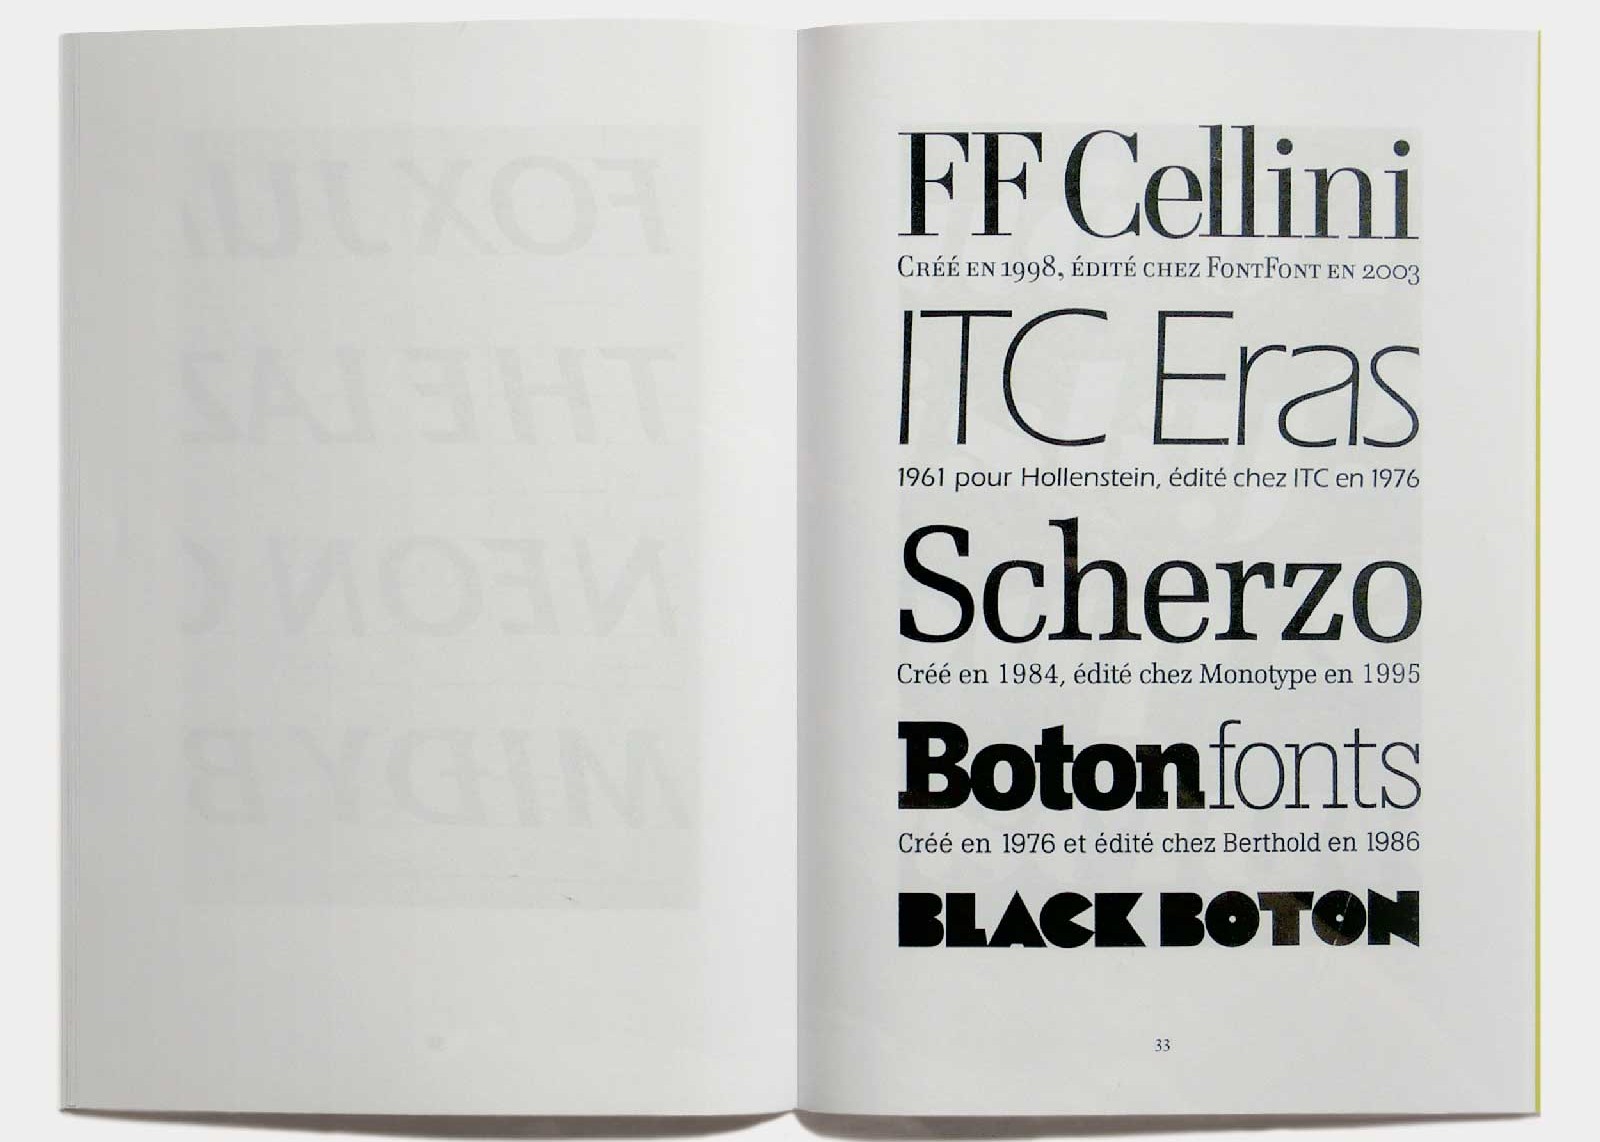 Page 33 — Caractères Cellini (1998 ; 2003, FontFont), Eras (1961, Hollenstein ; 1965, version plomb ; 1976, ITC), Scherzo (1984 ; 1990, Purup ; 1995, Monotype), Boton (1976, Typogabor ; 1986, Berthold), Black Boton (1970, Delpire ; 1997, Monotype).